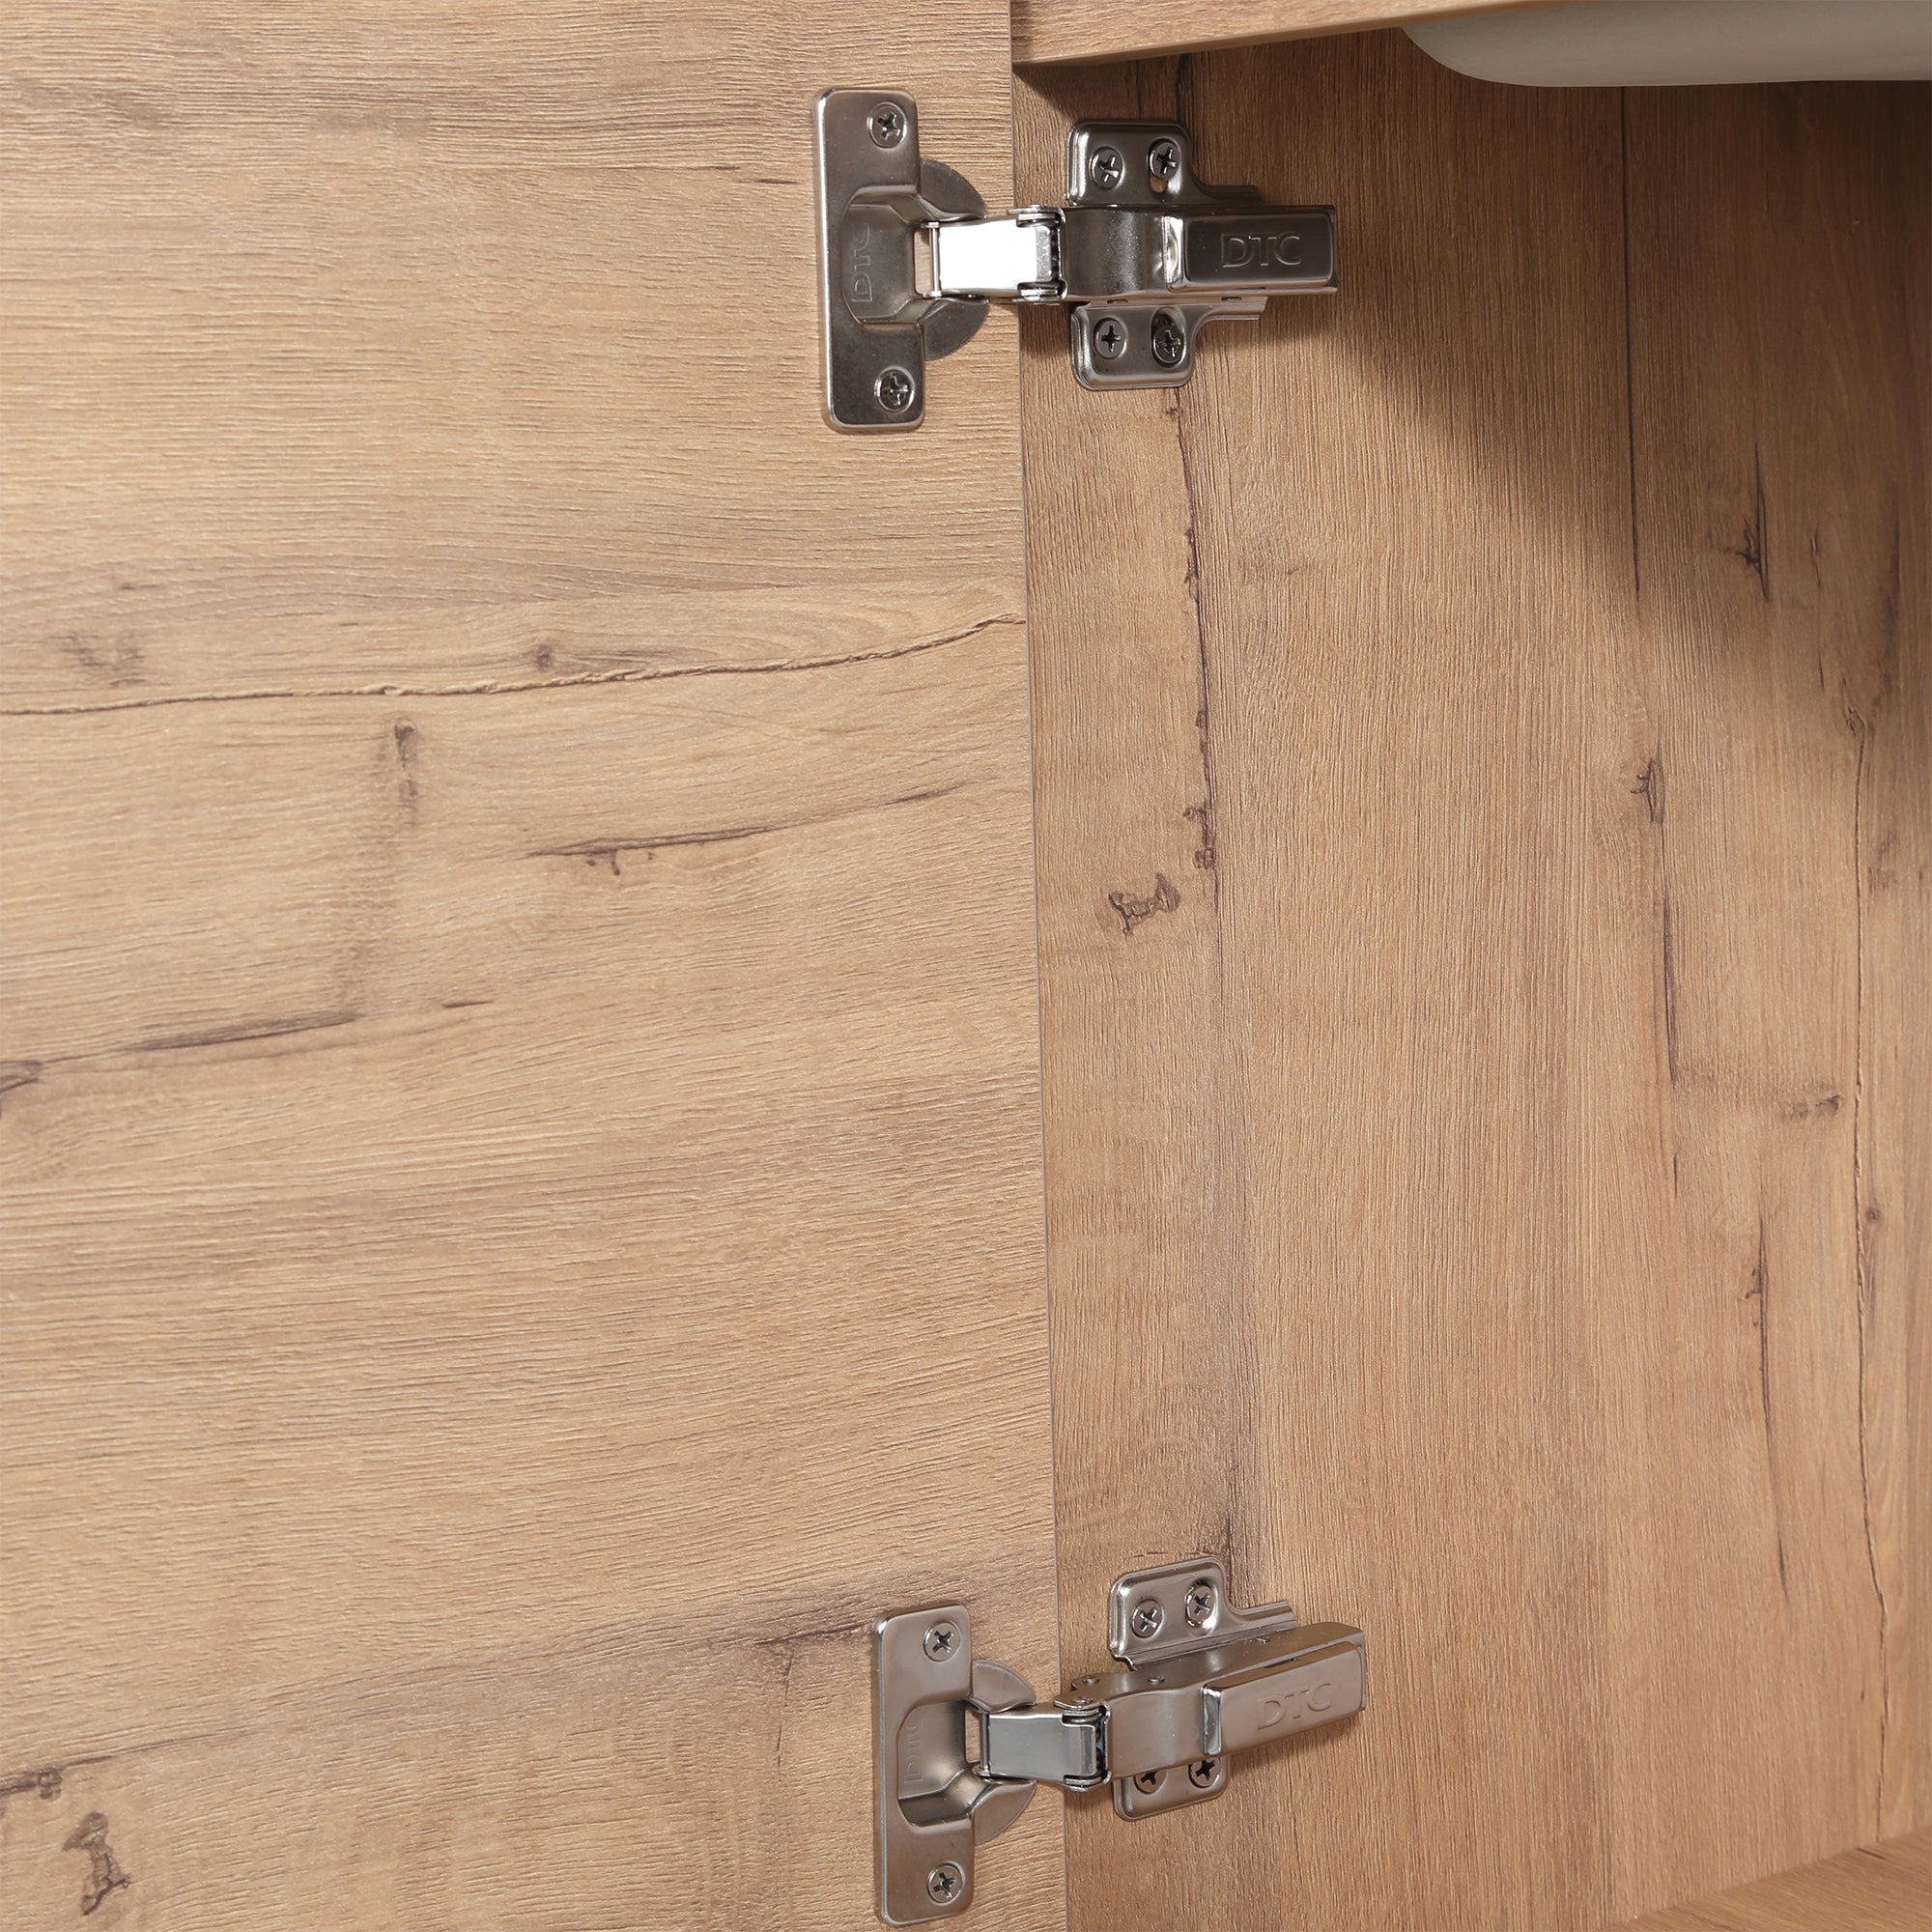 Staykiwi Floating Bathroom Vanity with Sink Set 22 Inch, Single Sink Wall-Mounted Bathroom Vanity with Soft Close Door